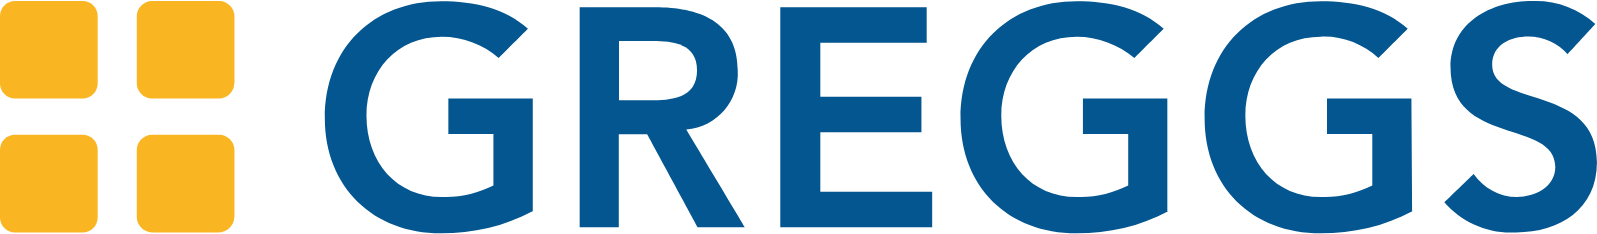 Greggs logo large (transparent PNG)